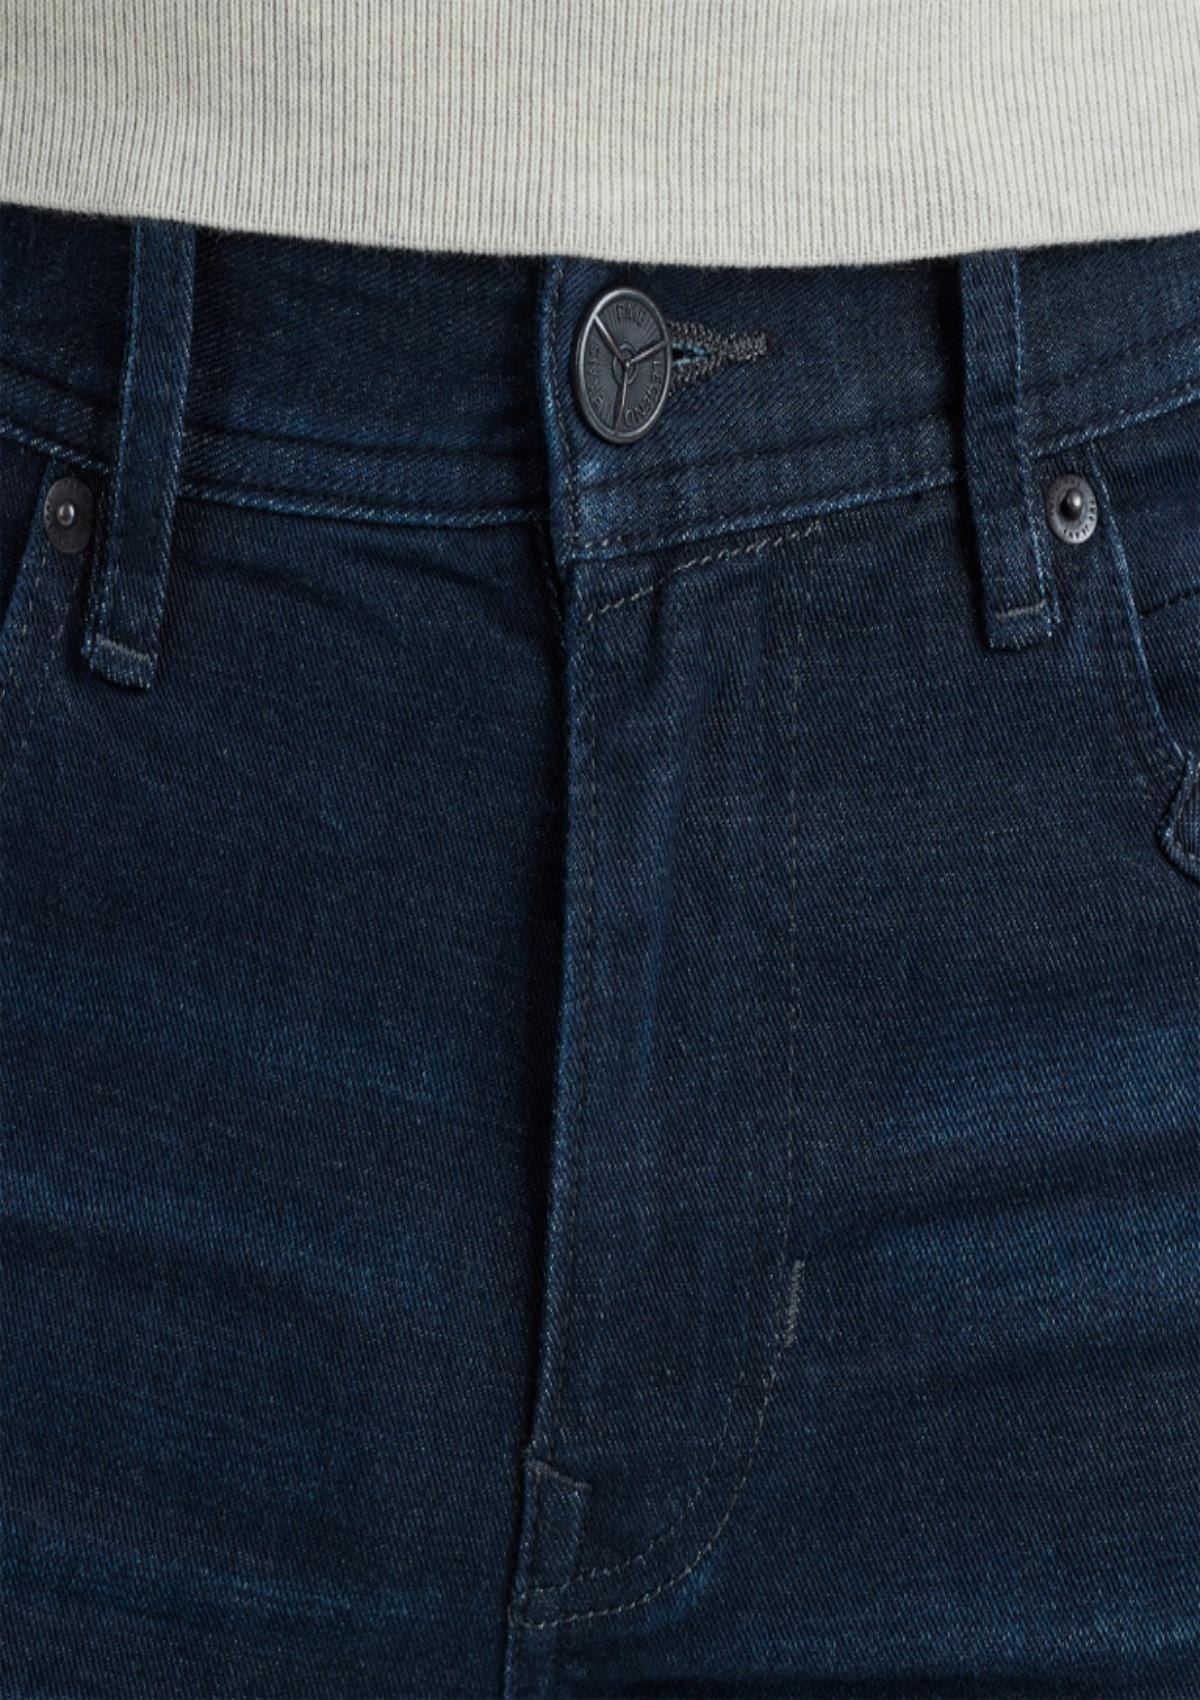 PME Legend Jeans PTR140-DDS DDS | Tailwheel Slim Fit Jeans